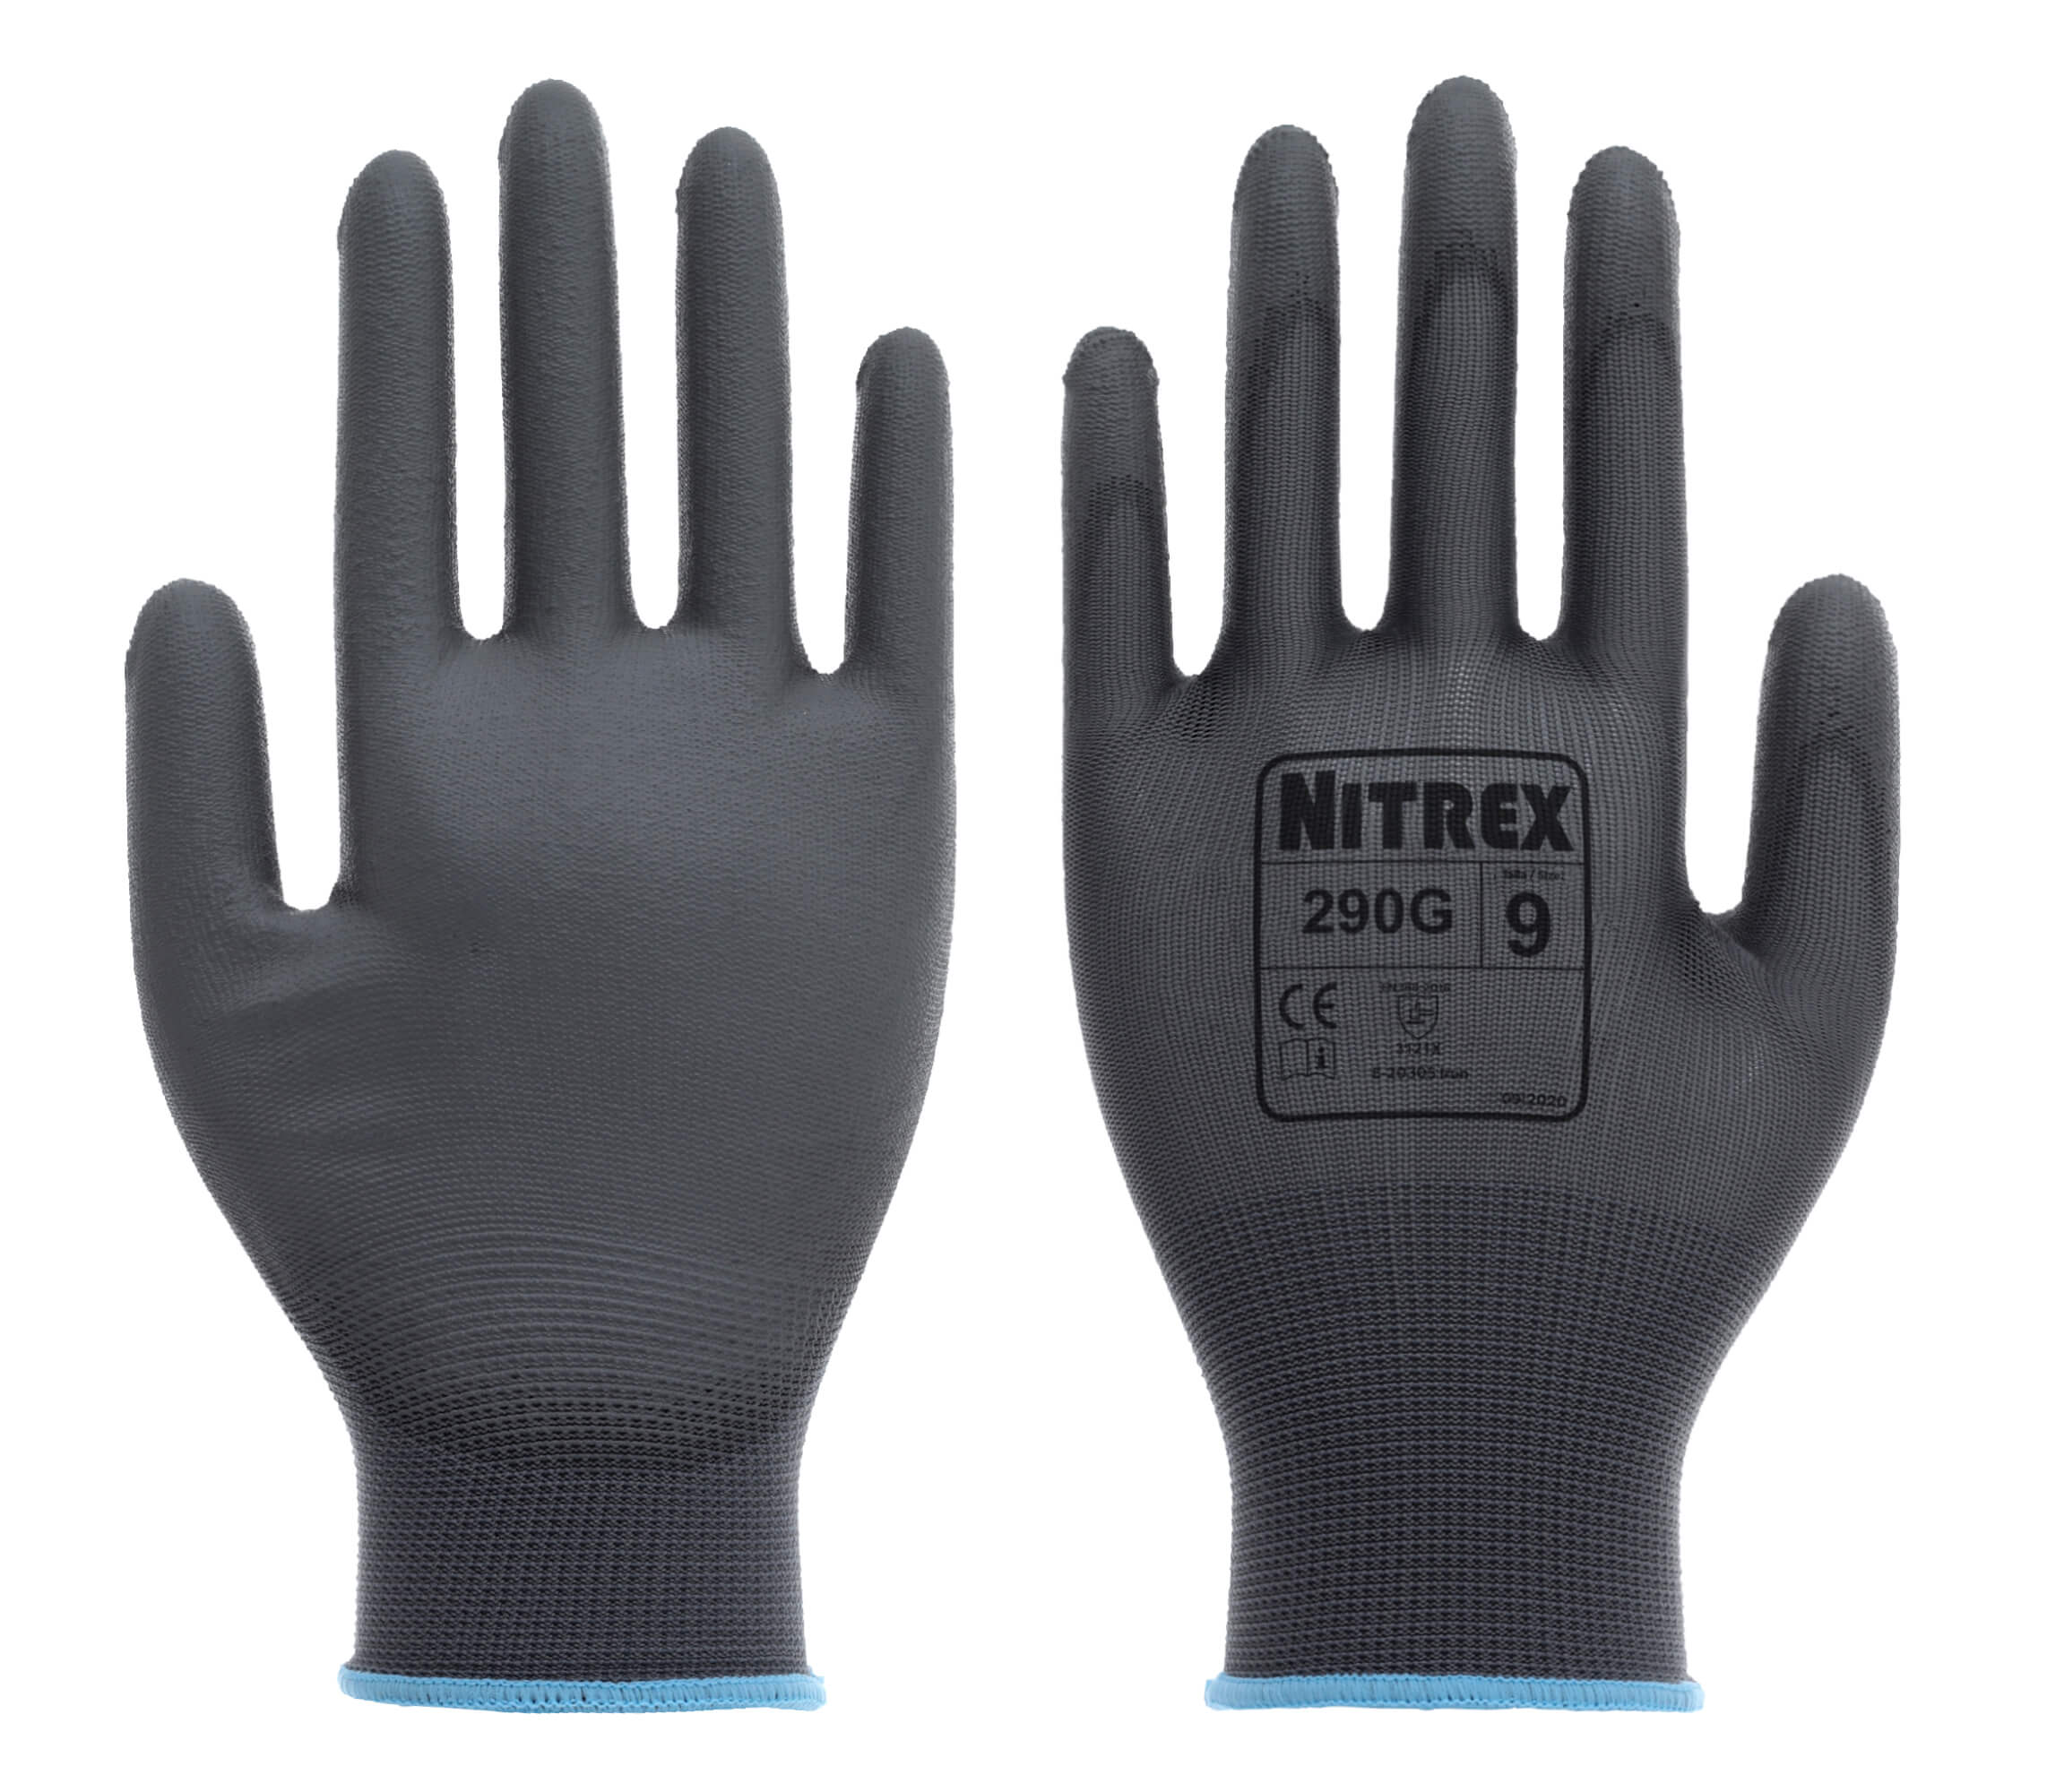 Nitrex 290 - Grey PU Palm Coated Glove - Size 6/XS 